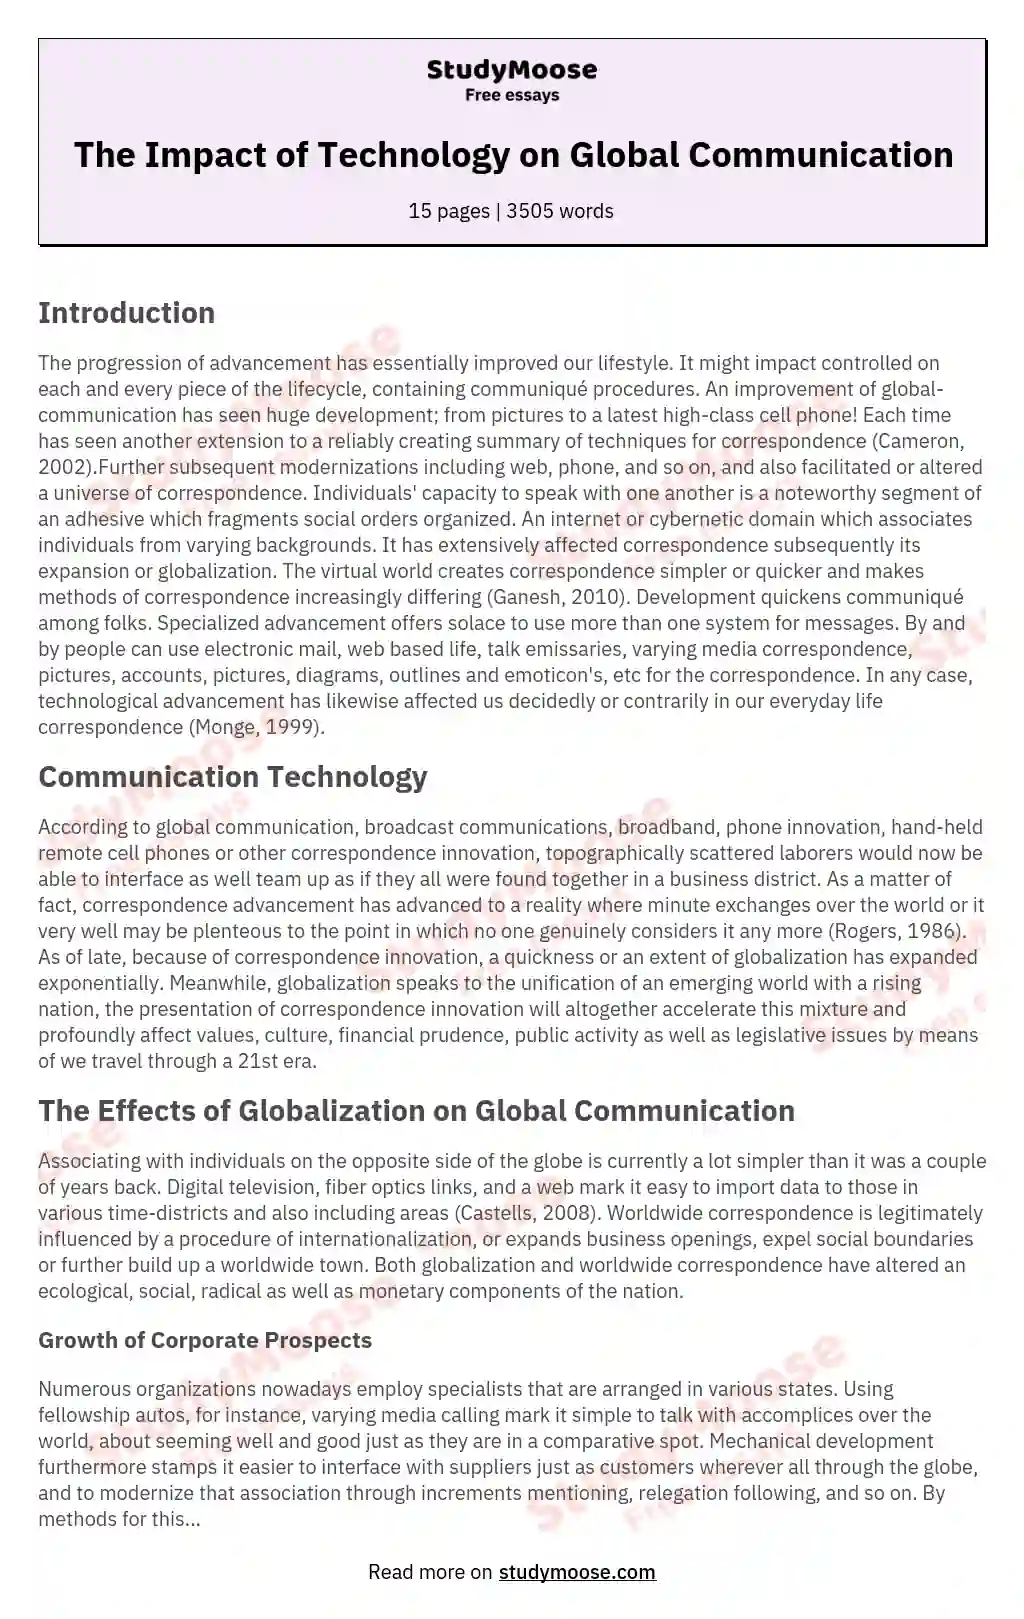 communication technology essay in english